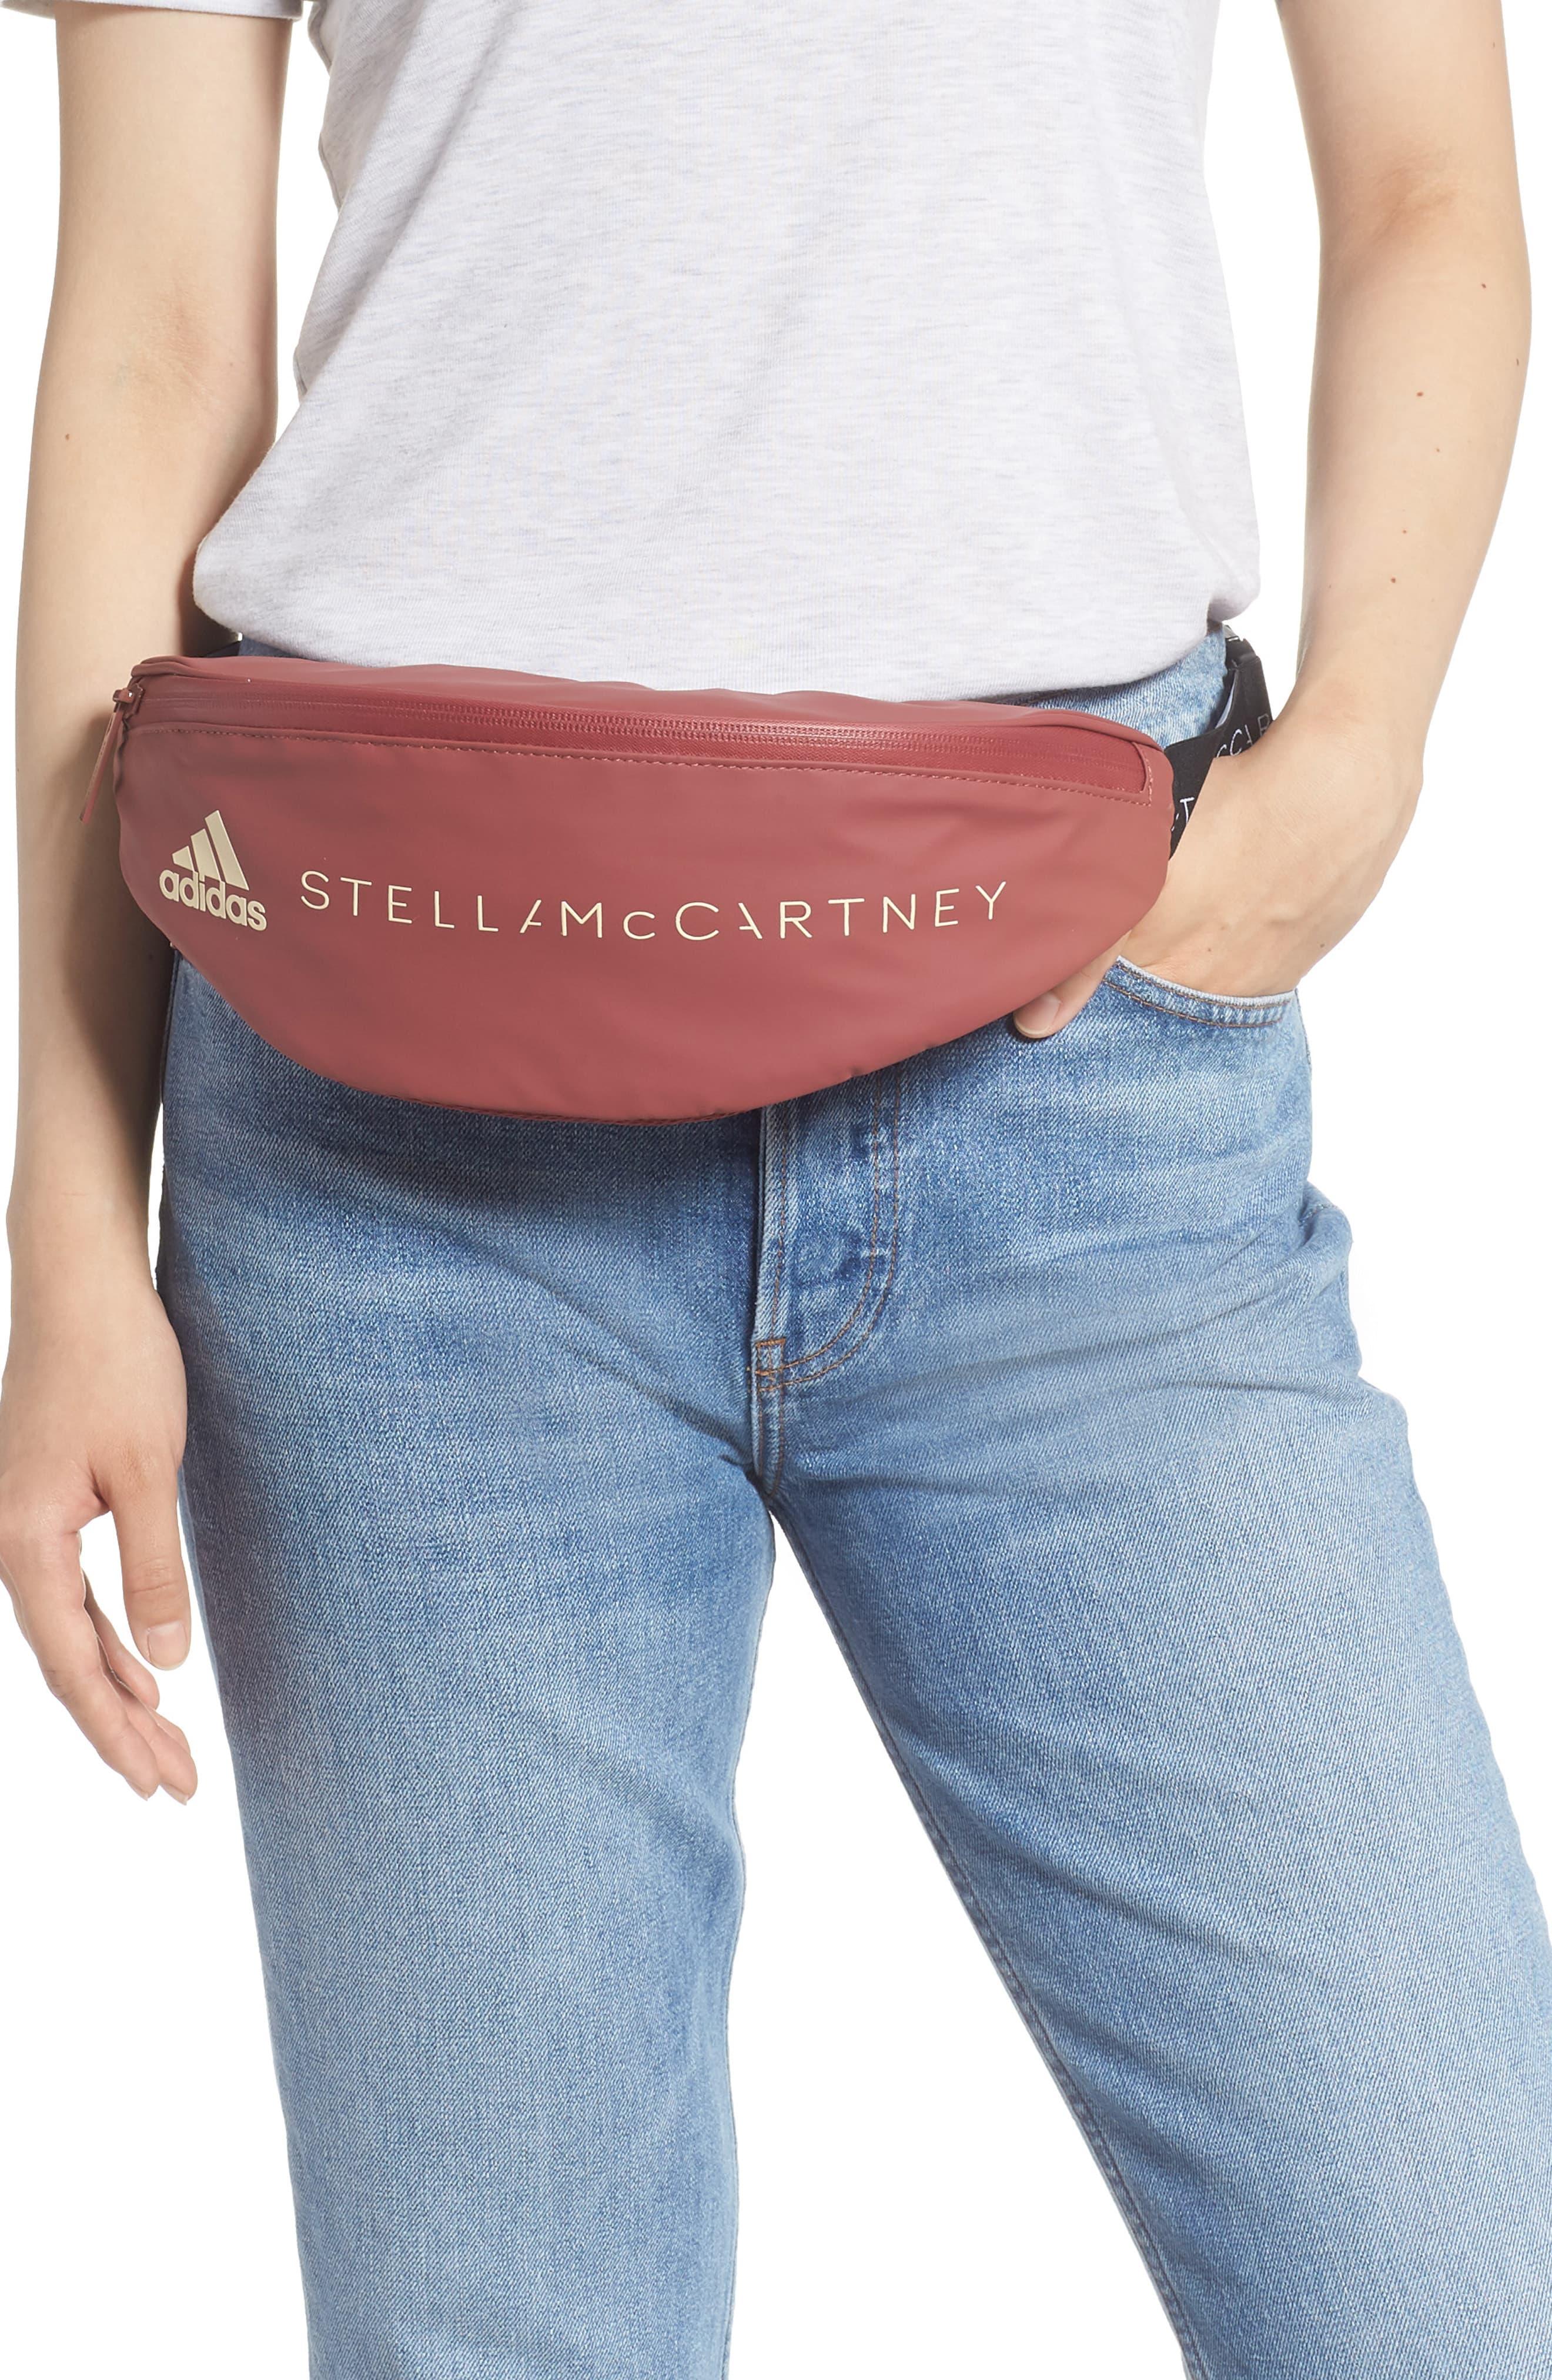 adidas By Stella McCartney Badge Of Sports Belt Bag in Red - Lyst